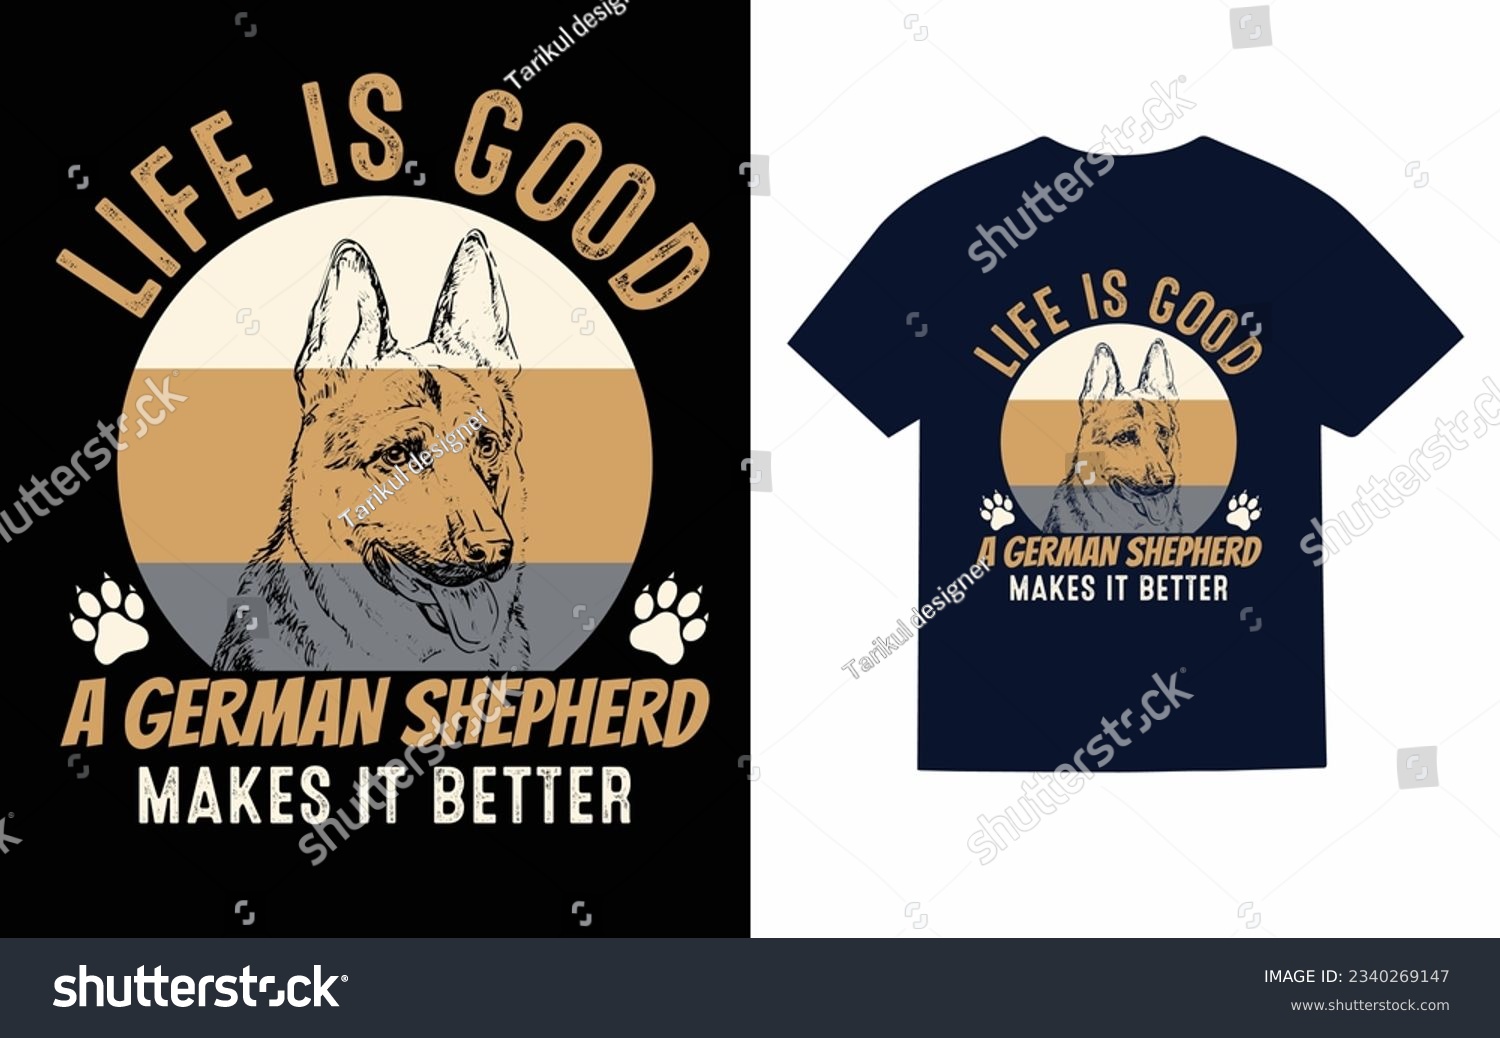 SVG of life is good a german shepherd makes..., shepherd dog t shirt design svg